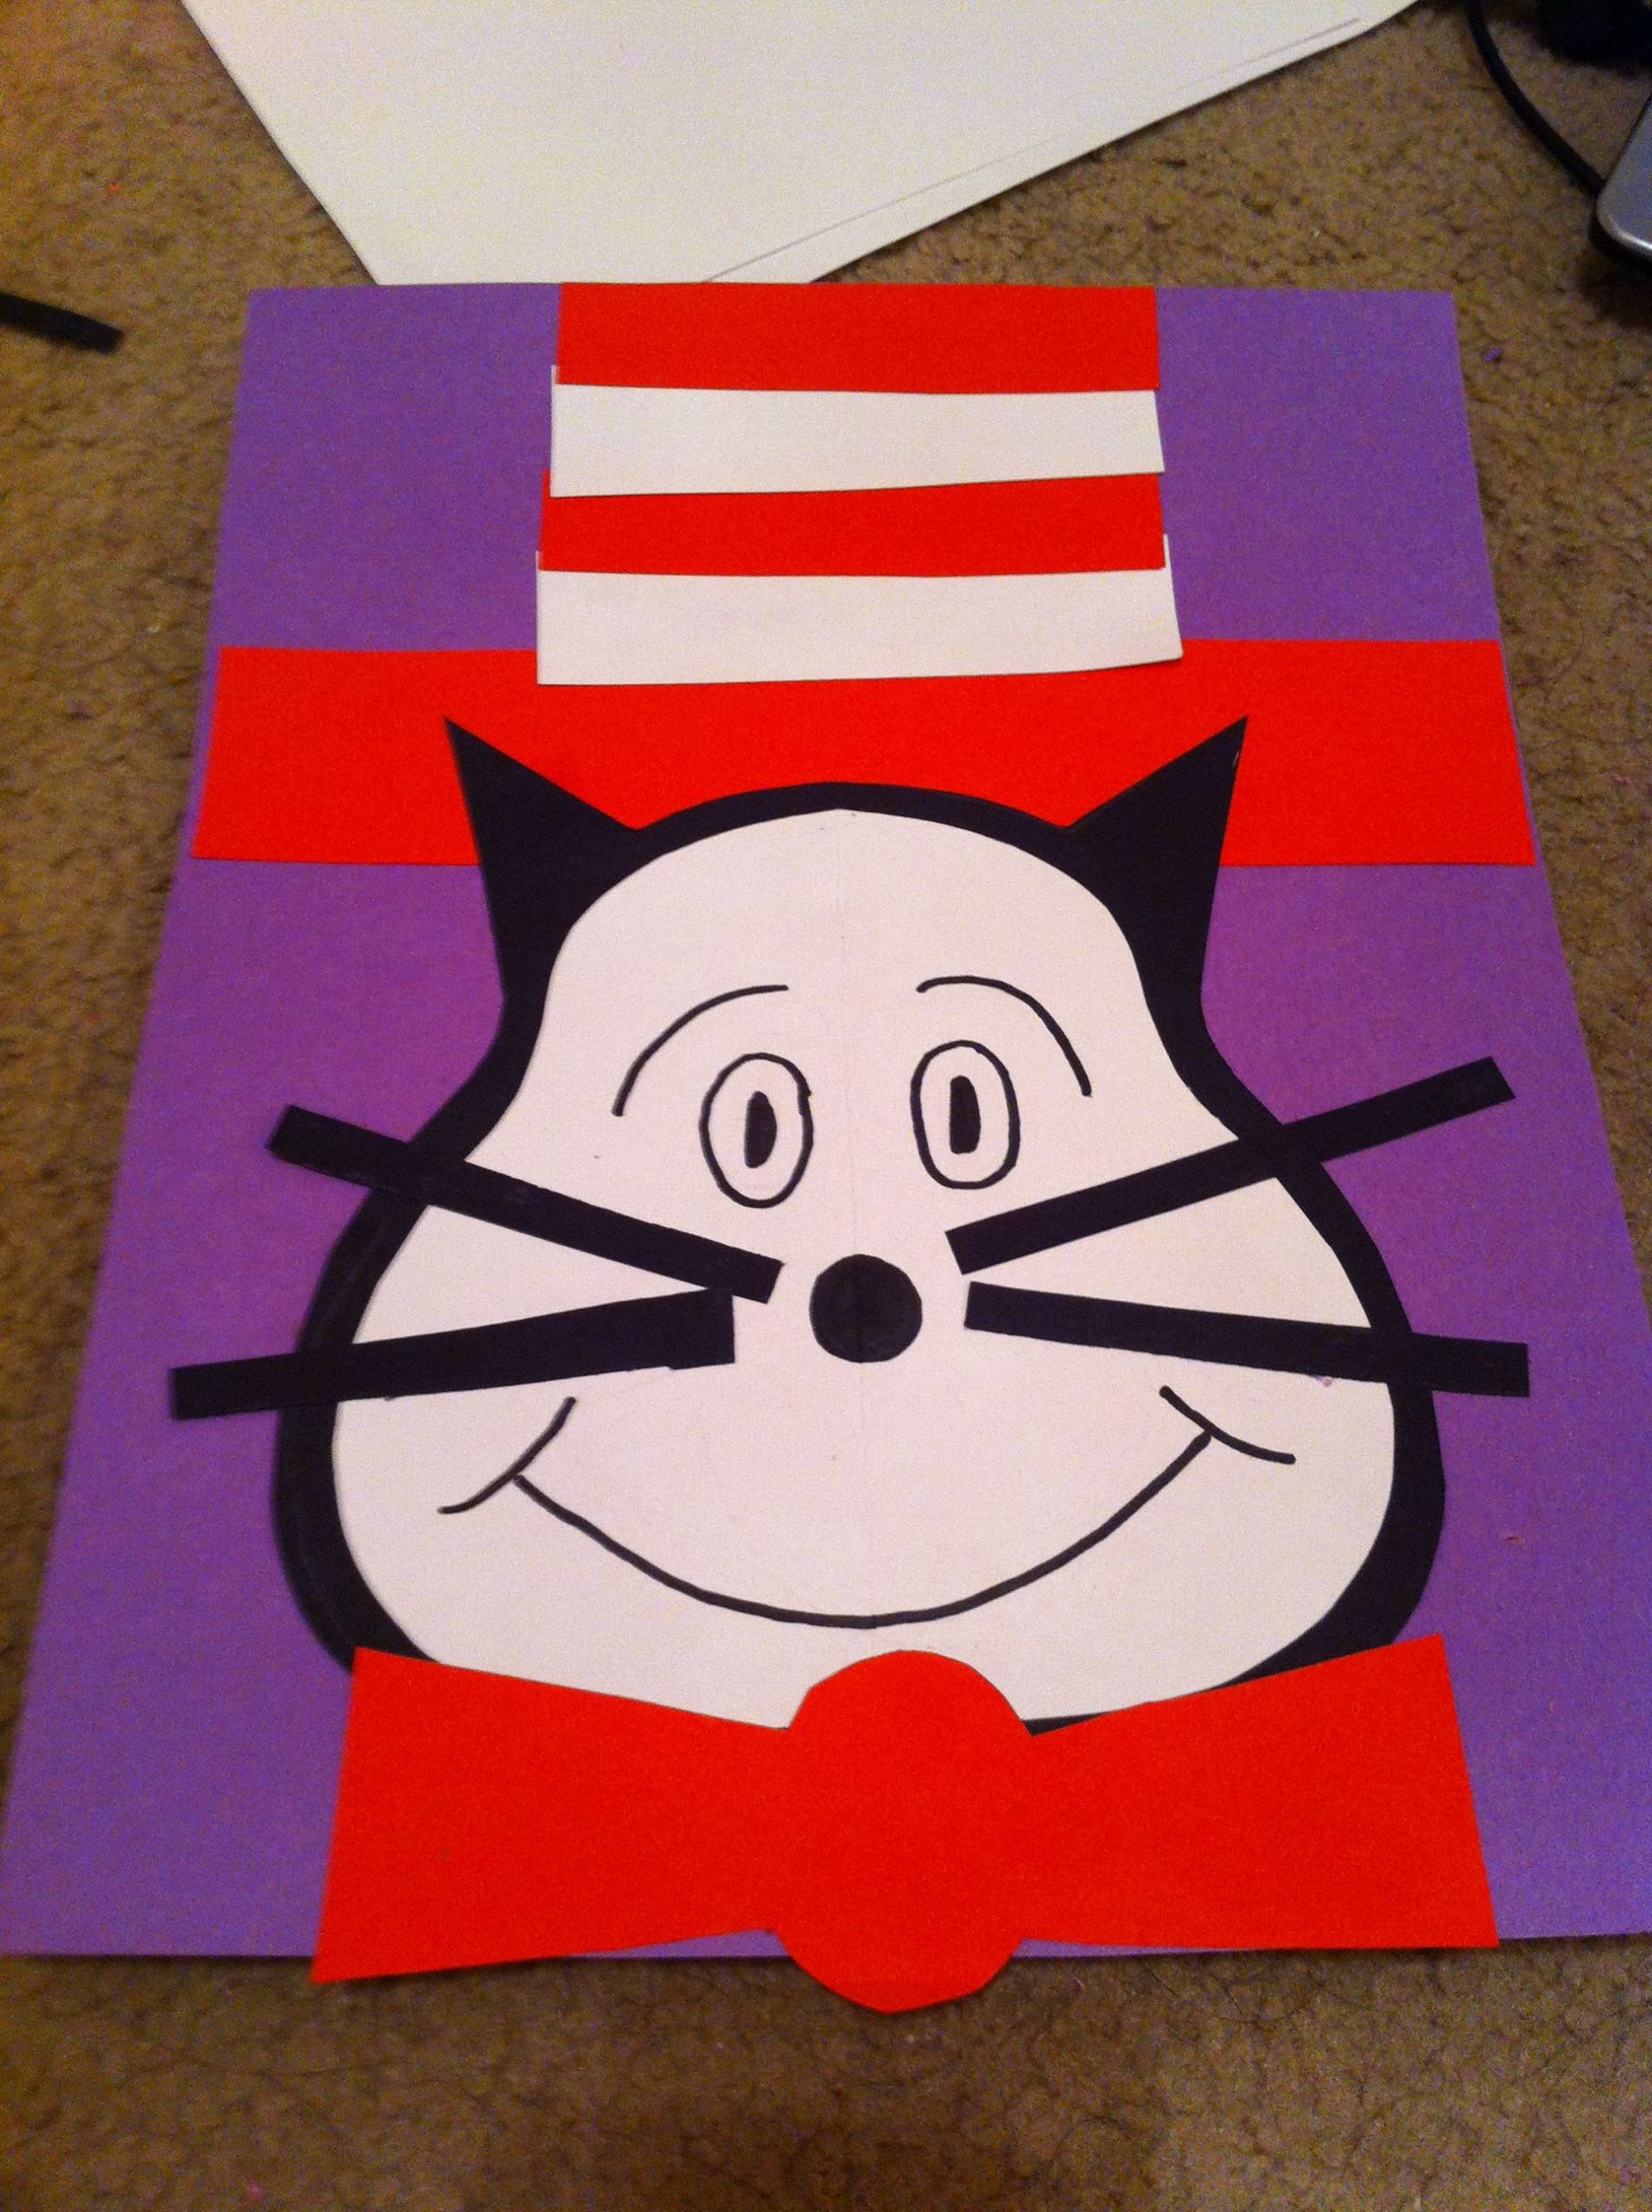 Dr Seuss Craft Ideas For Preschoolers
 Cat in the hat craft for preschoolers Dr suess